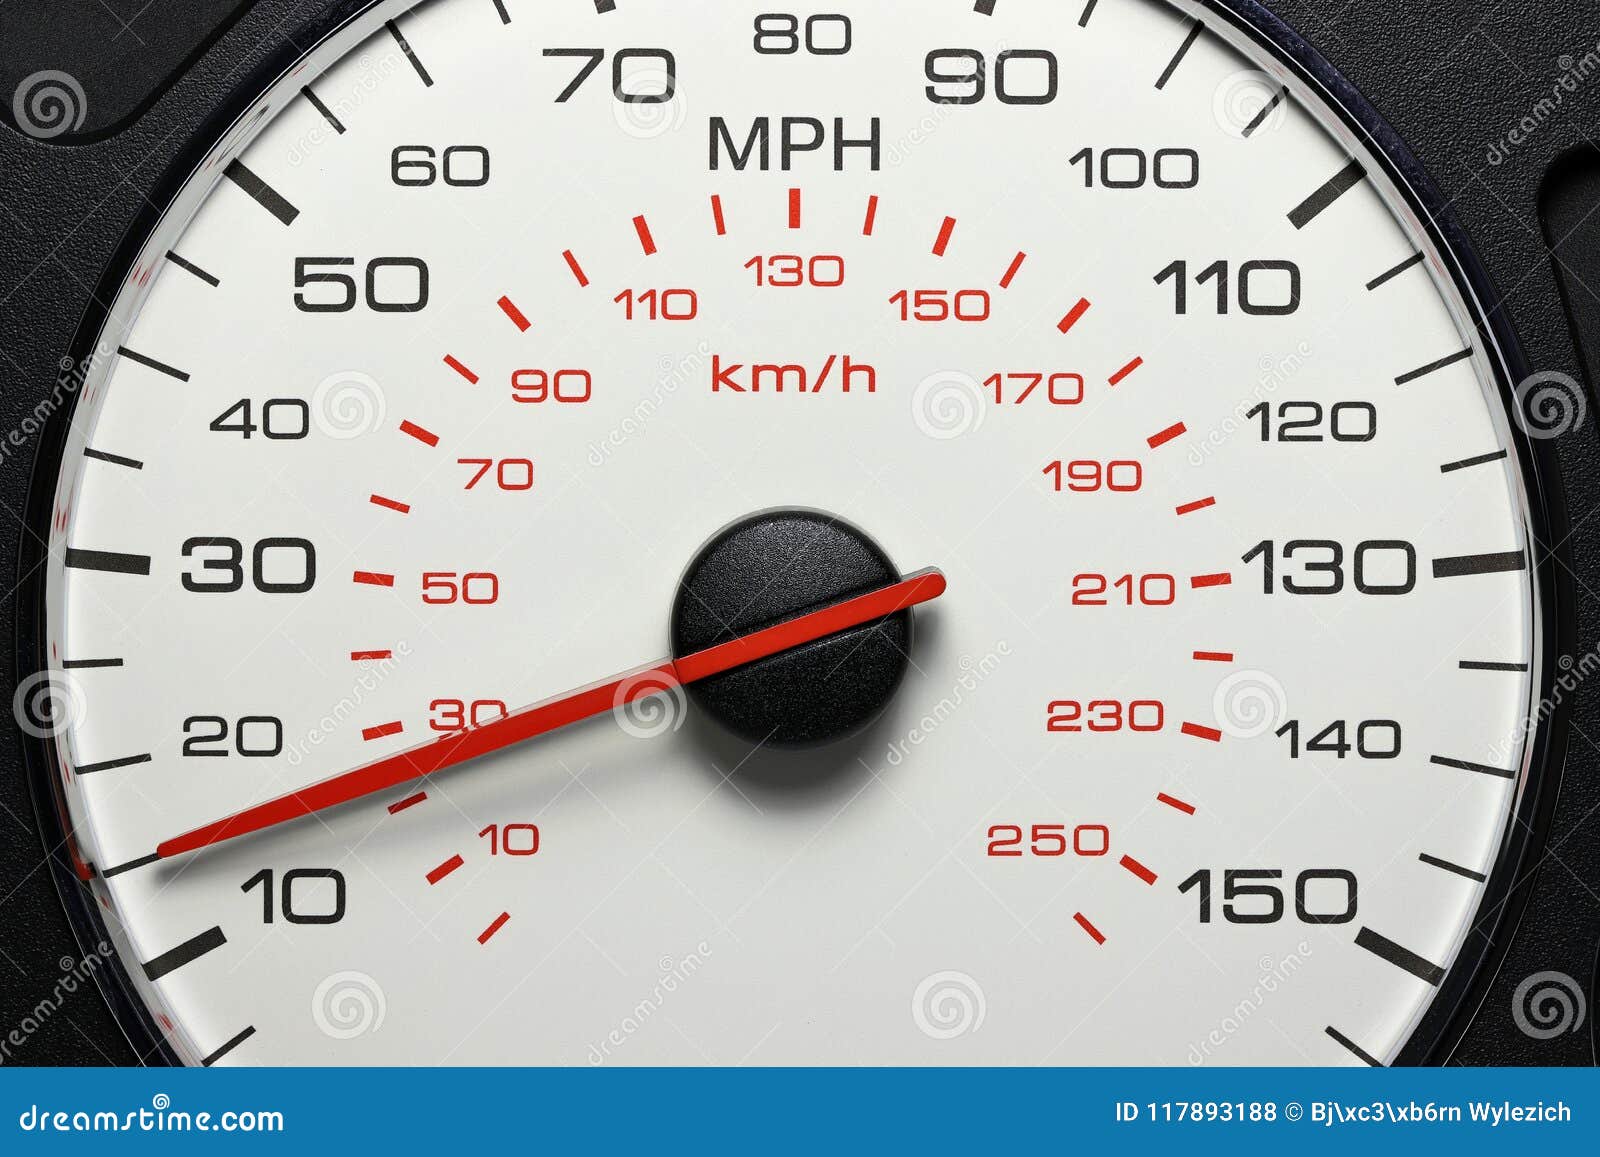 speedometer-mph-car-117893188.jpg